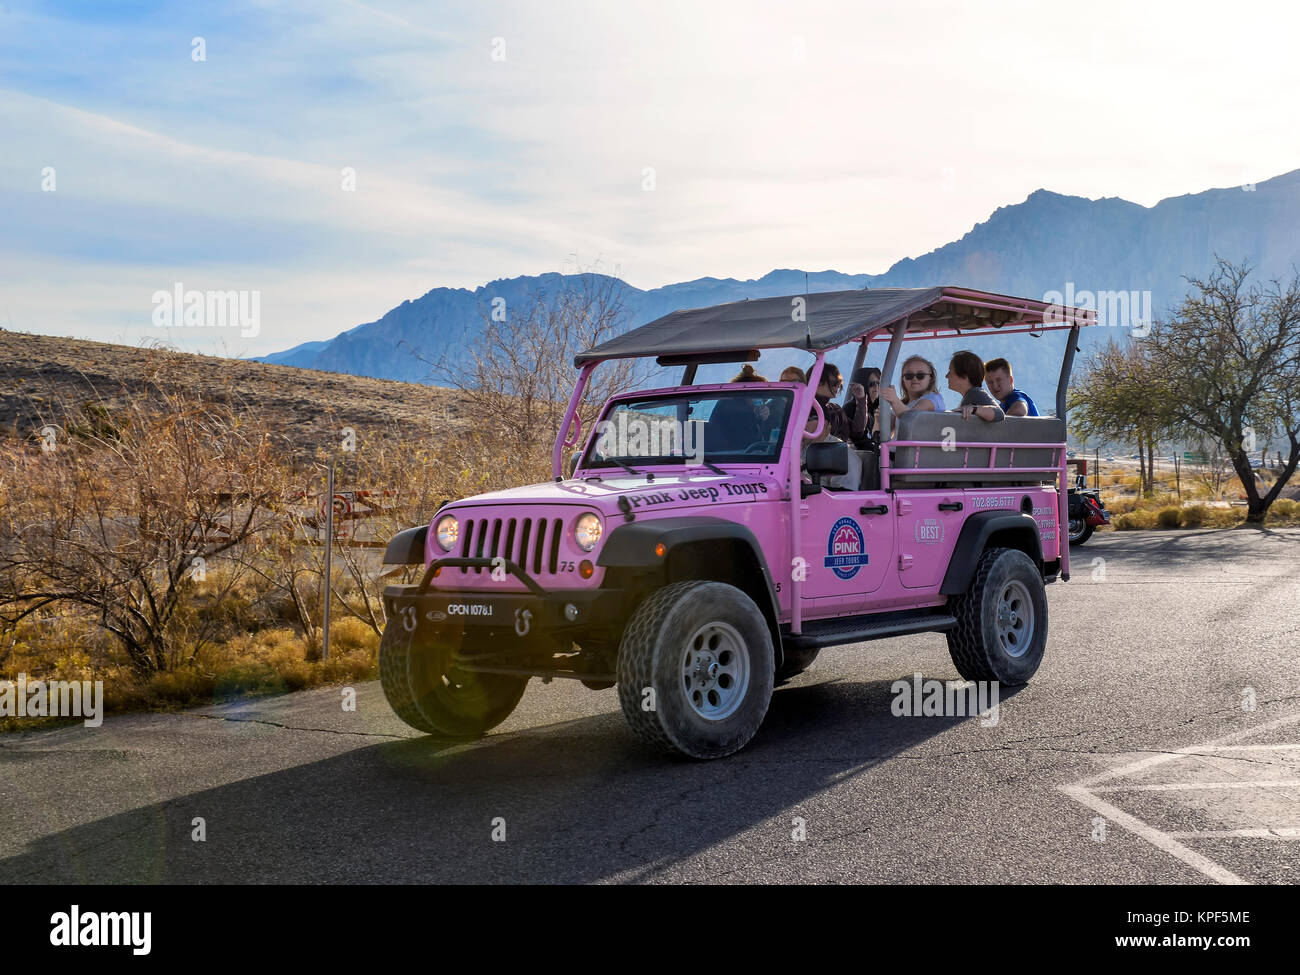 Ein Pink Jeep Tours Vehical im Red Rock Canyon, Las Vegas, Nevada. Stockfoto